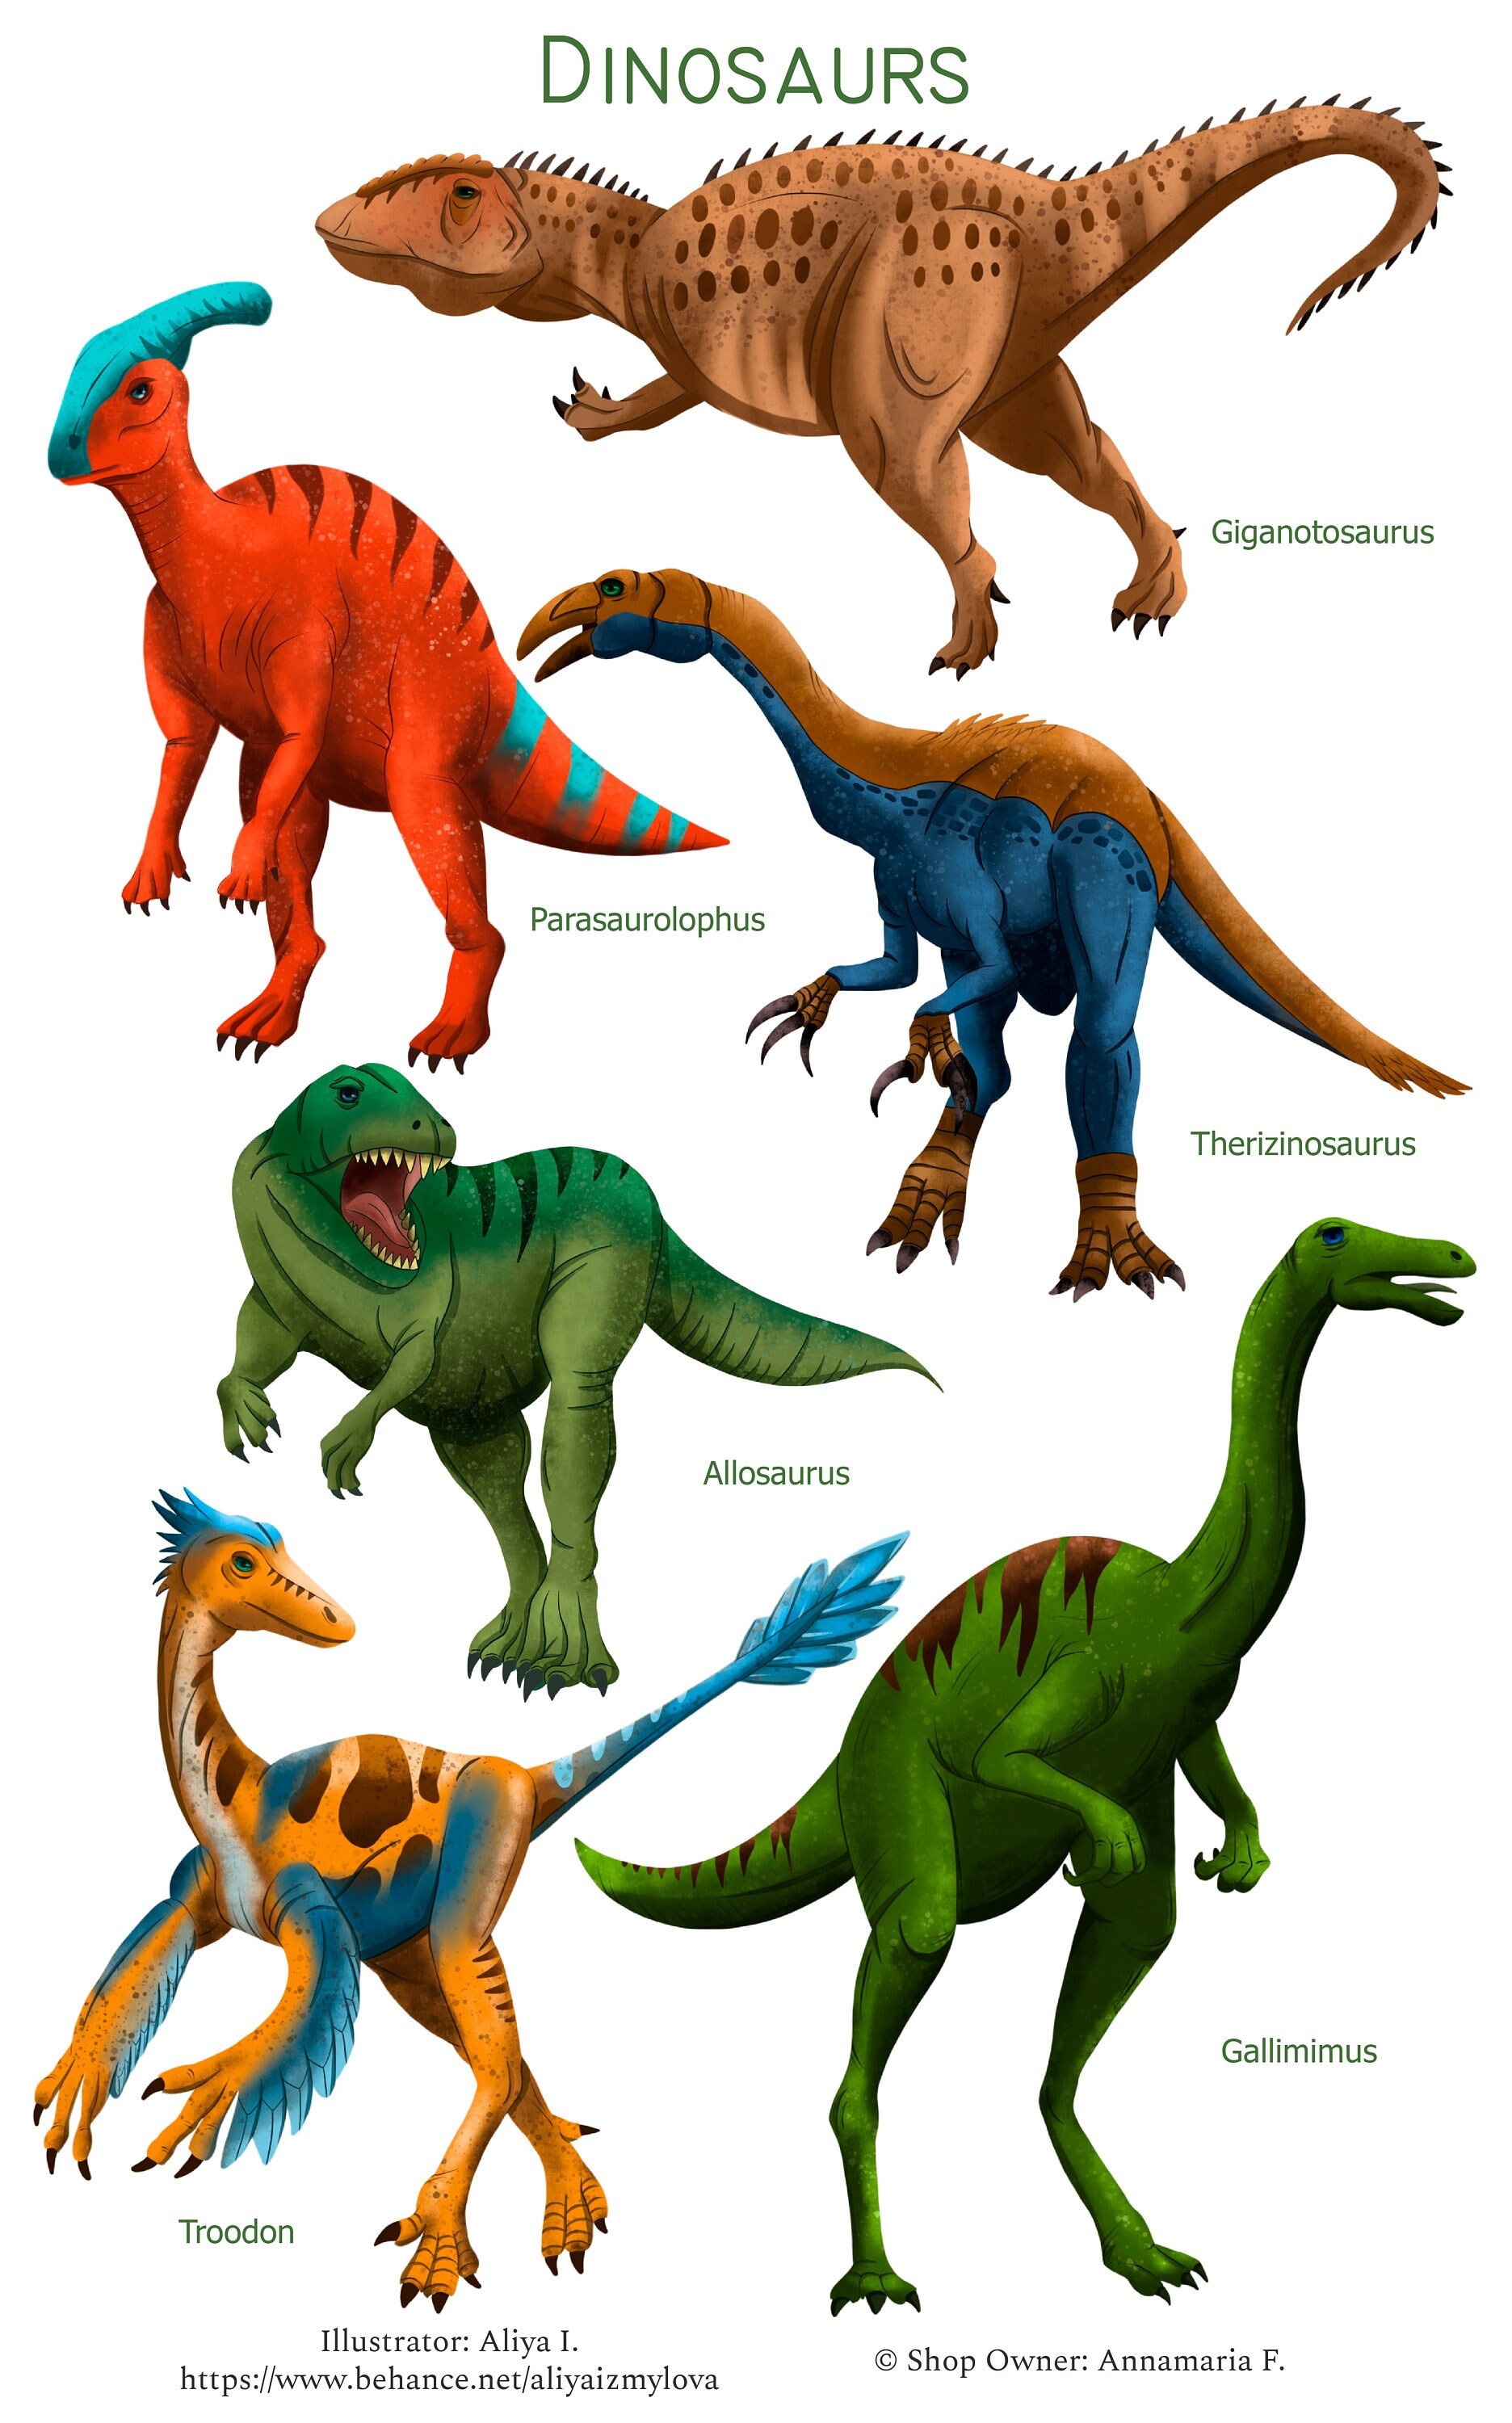 Run Dino Run on Behance  Dinosaur art, Monster design, Dinosaur